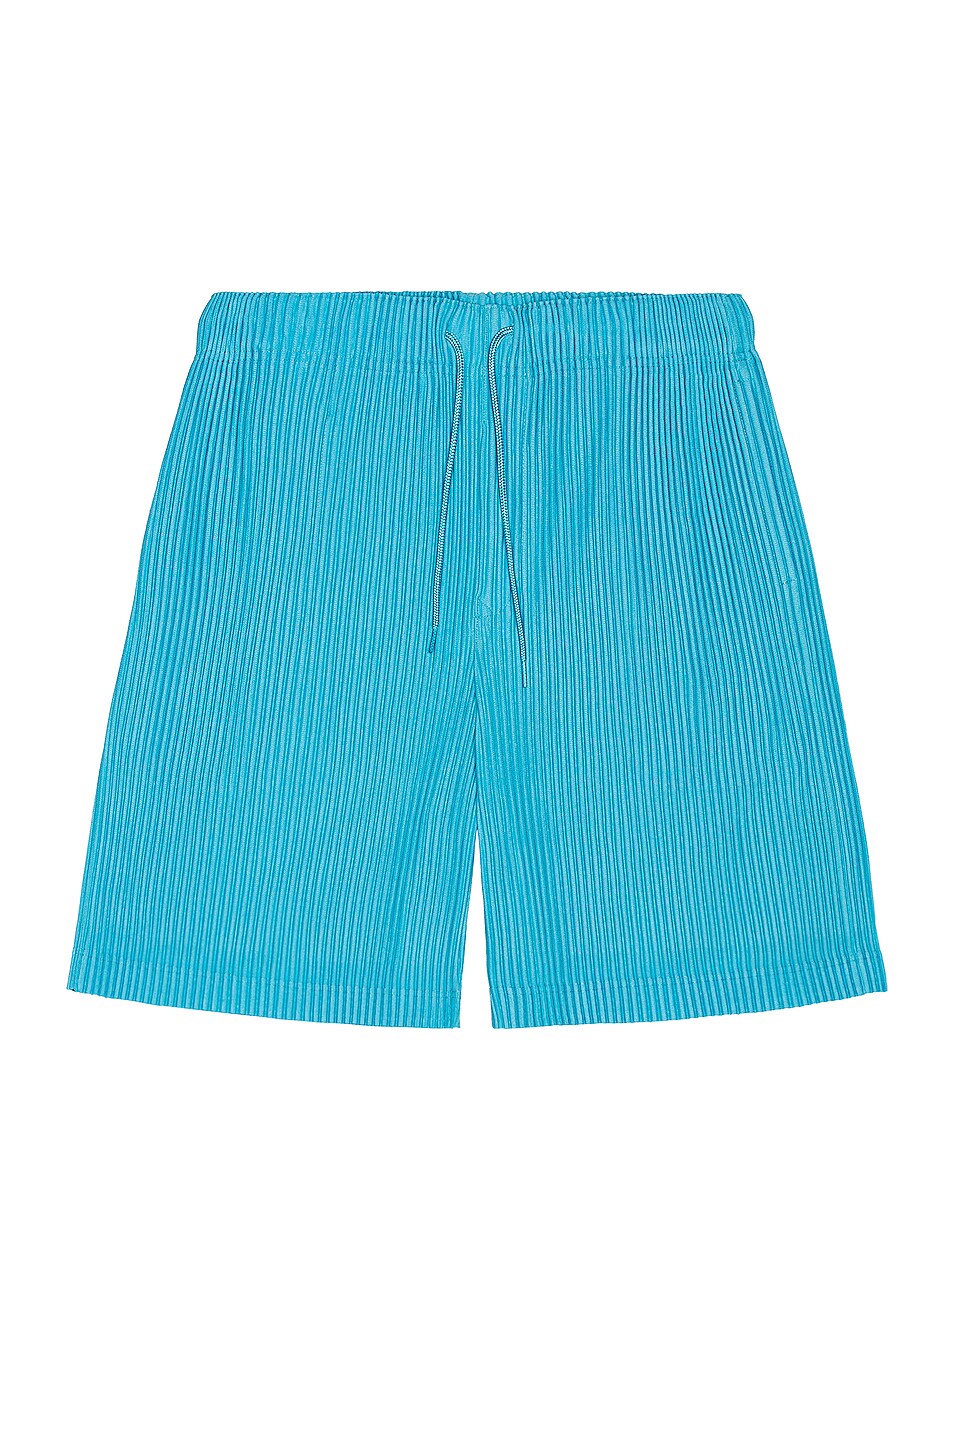 Image 1 of Homme Plisse Issey Miyake Shorts in Blue Hued